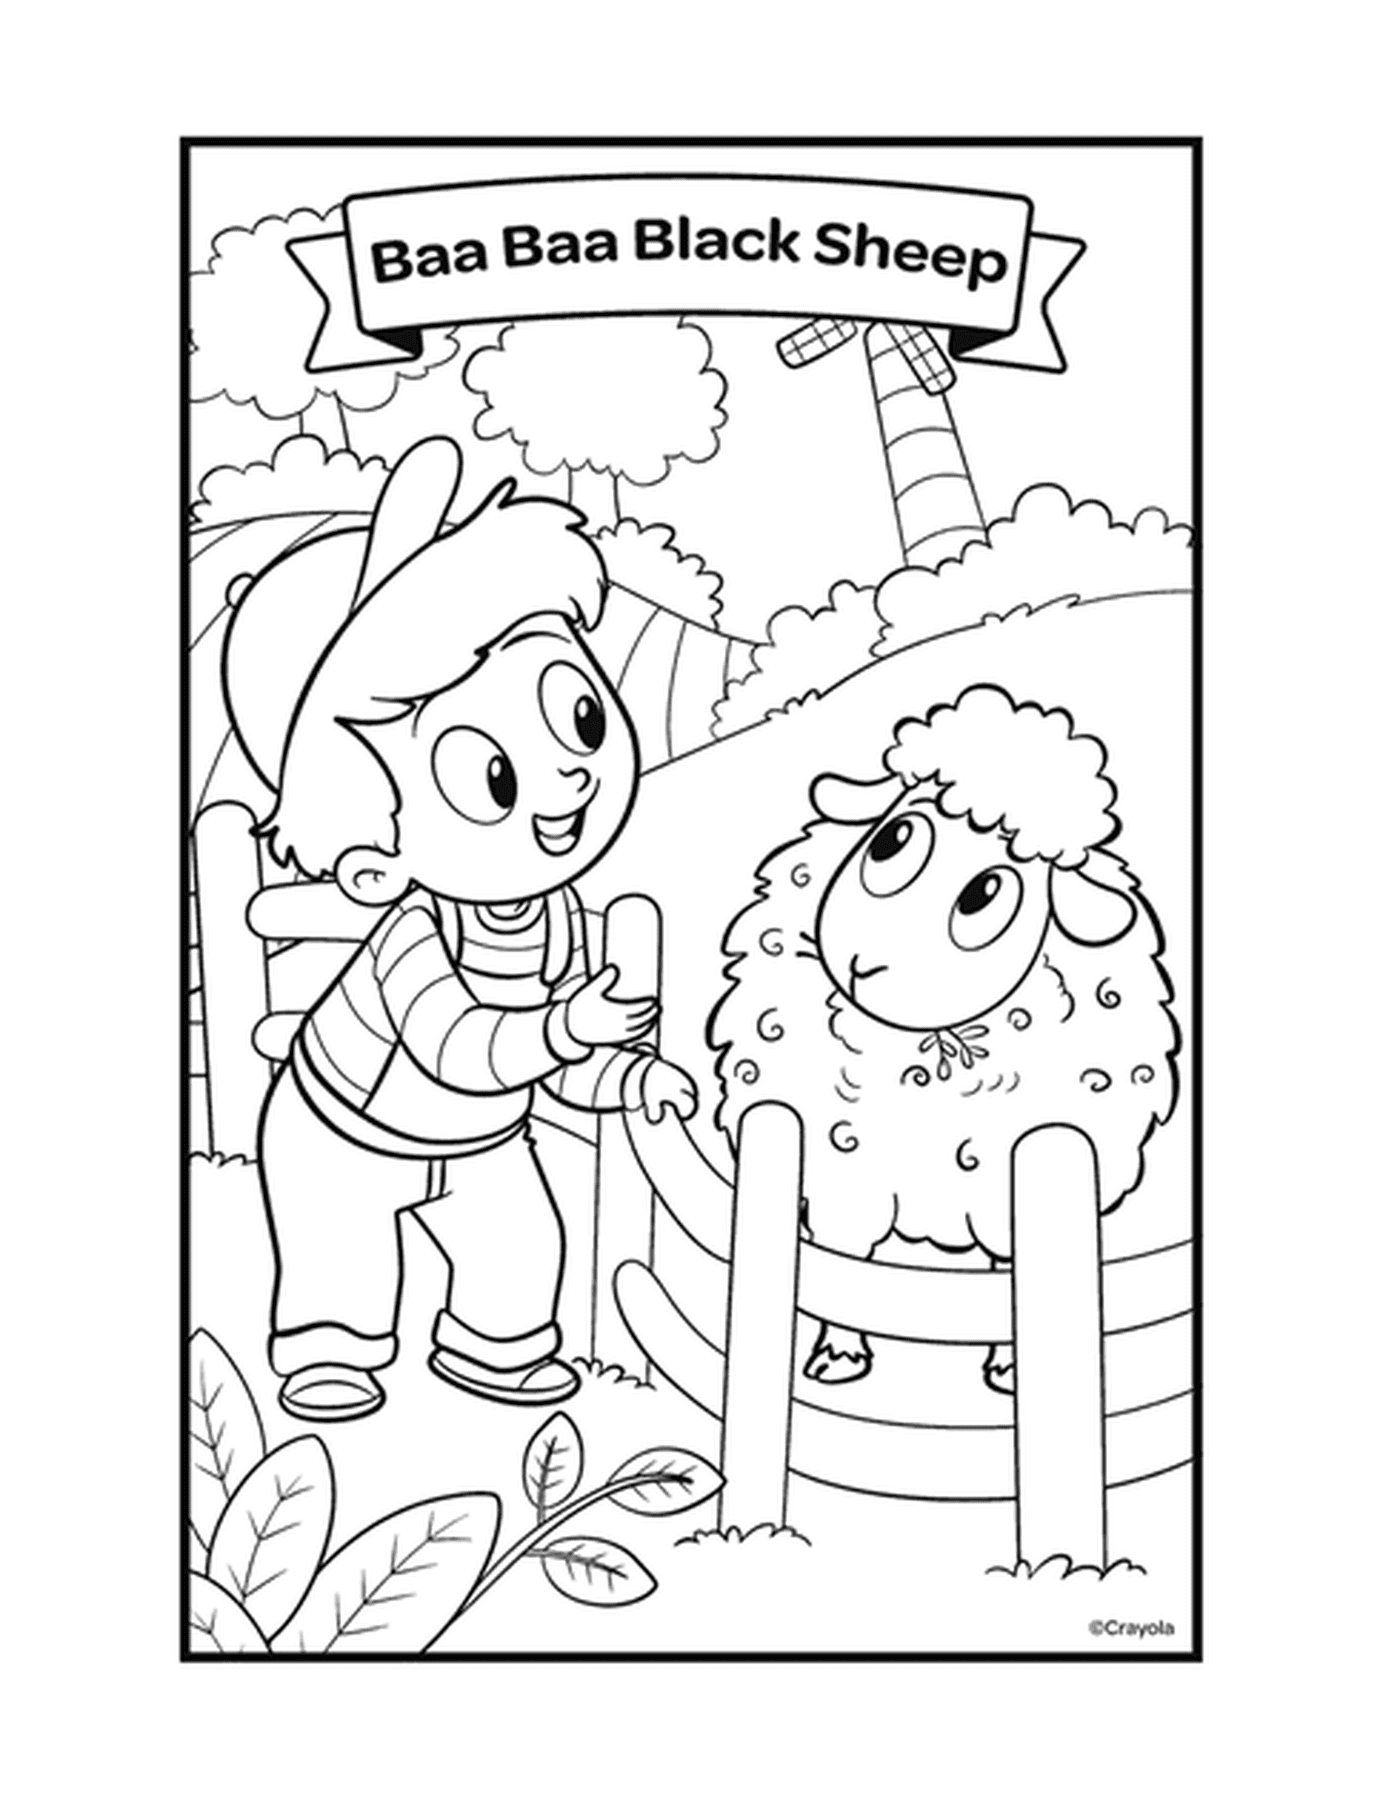  The figure Baa Baa Black Sheep with a boy caressing a sheep in a pen 